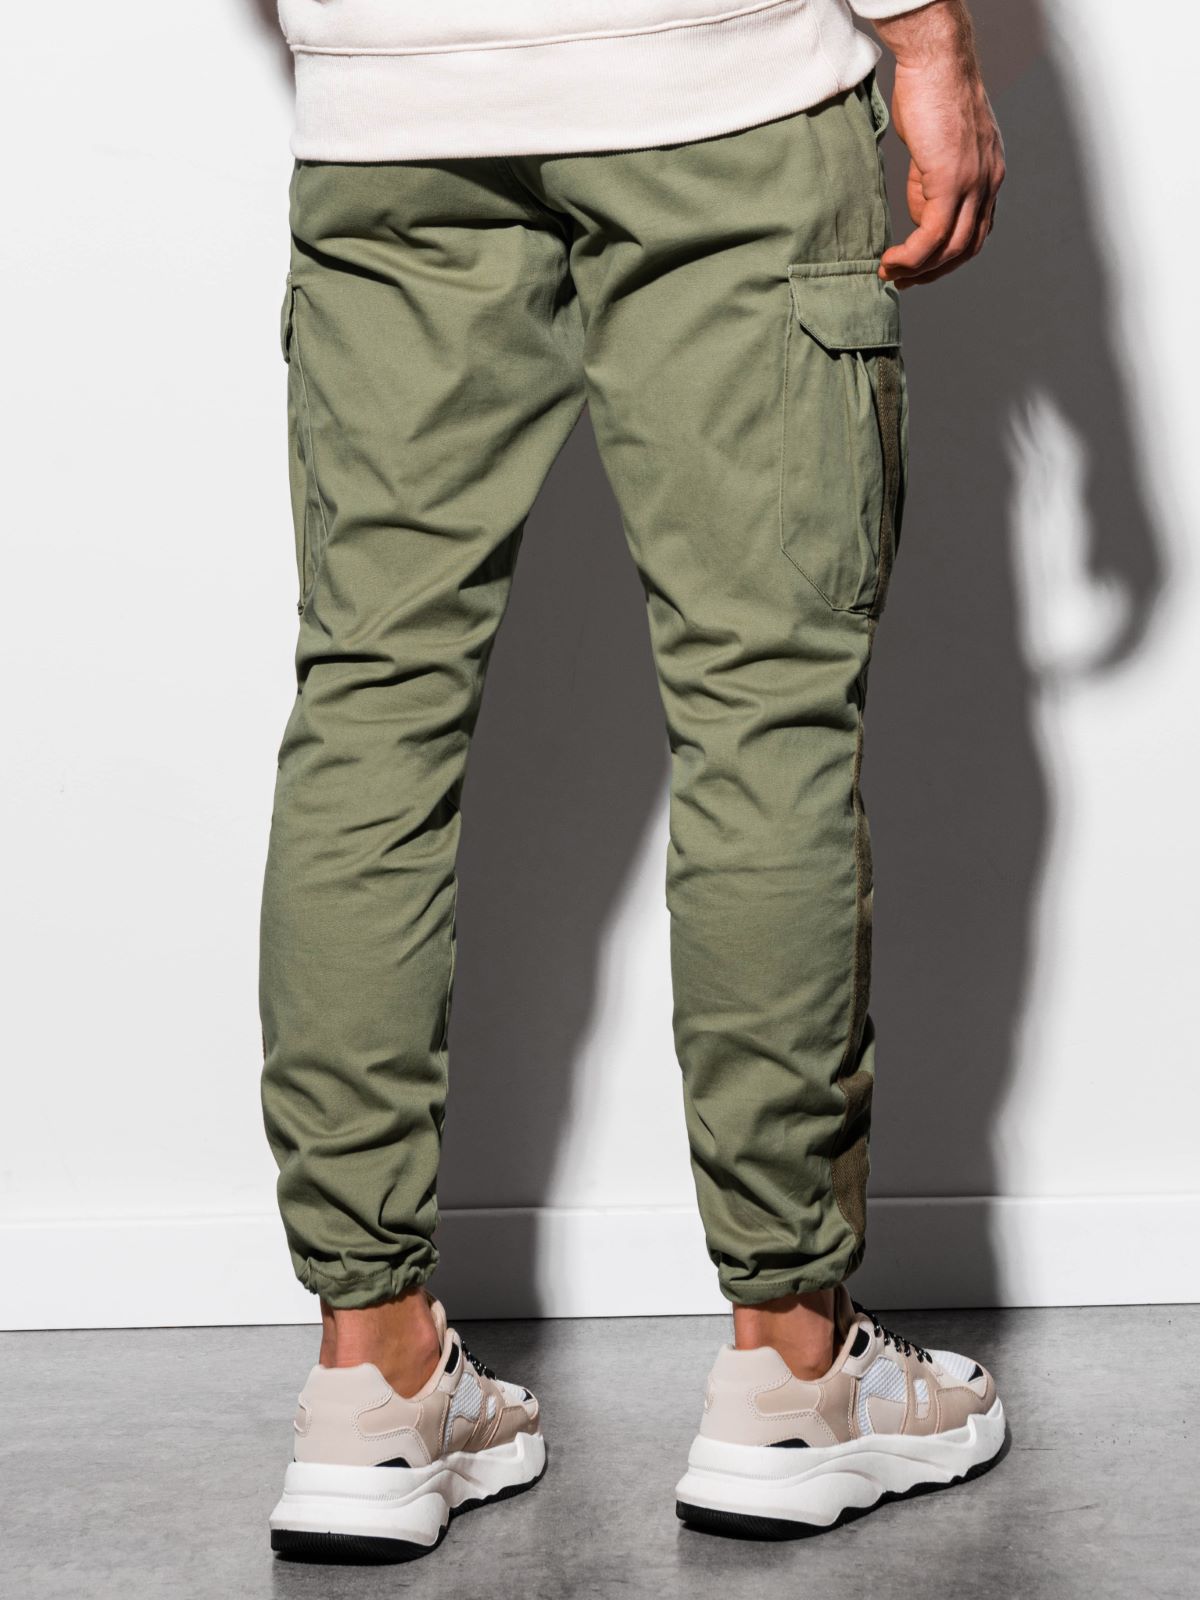 Men's pants joggers P893 - green | MODONE wholesale - Clothing For Men